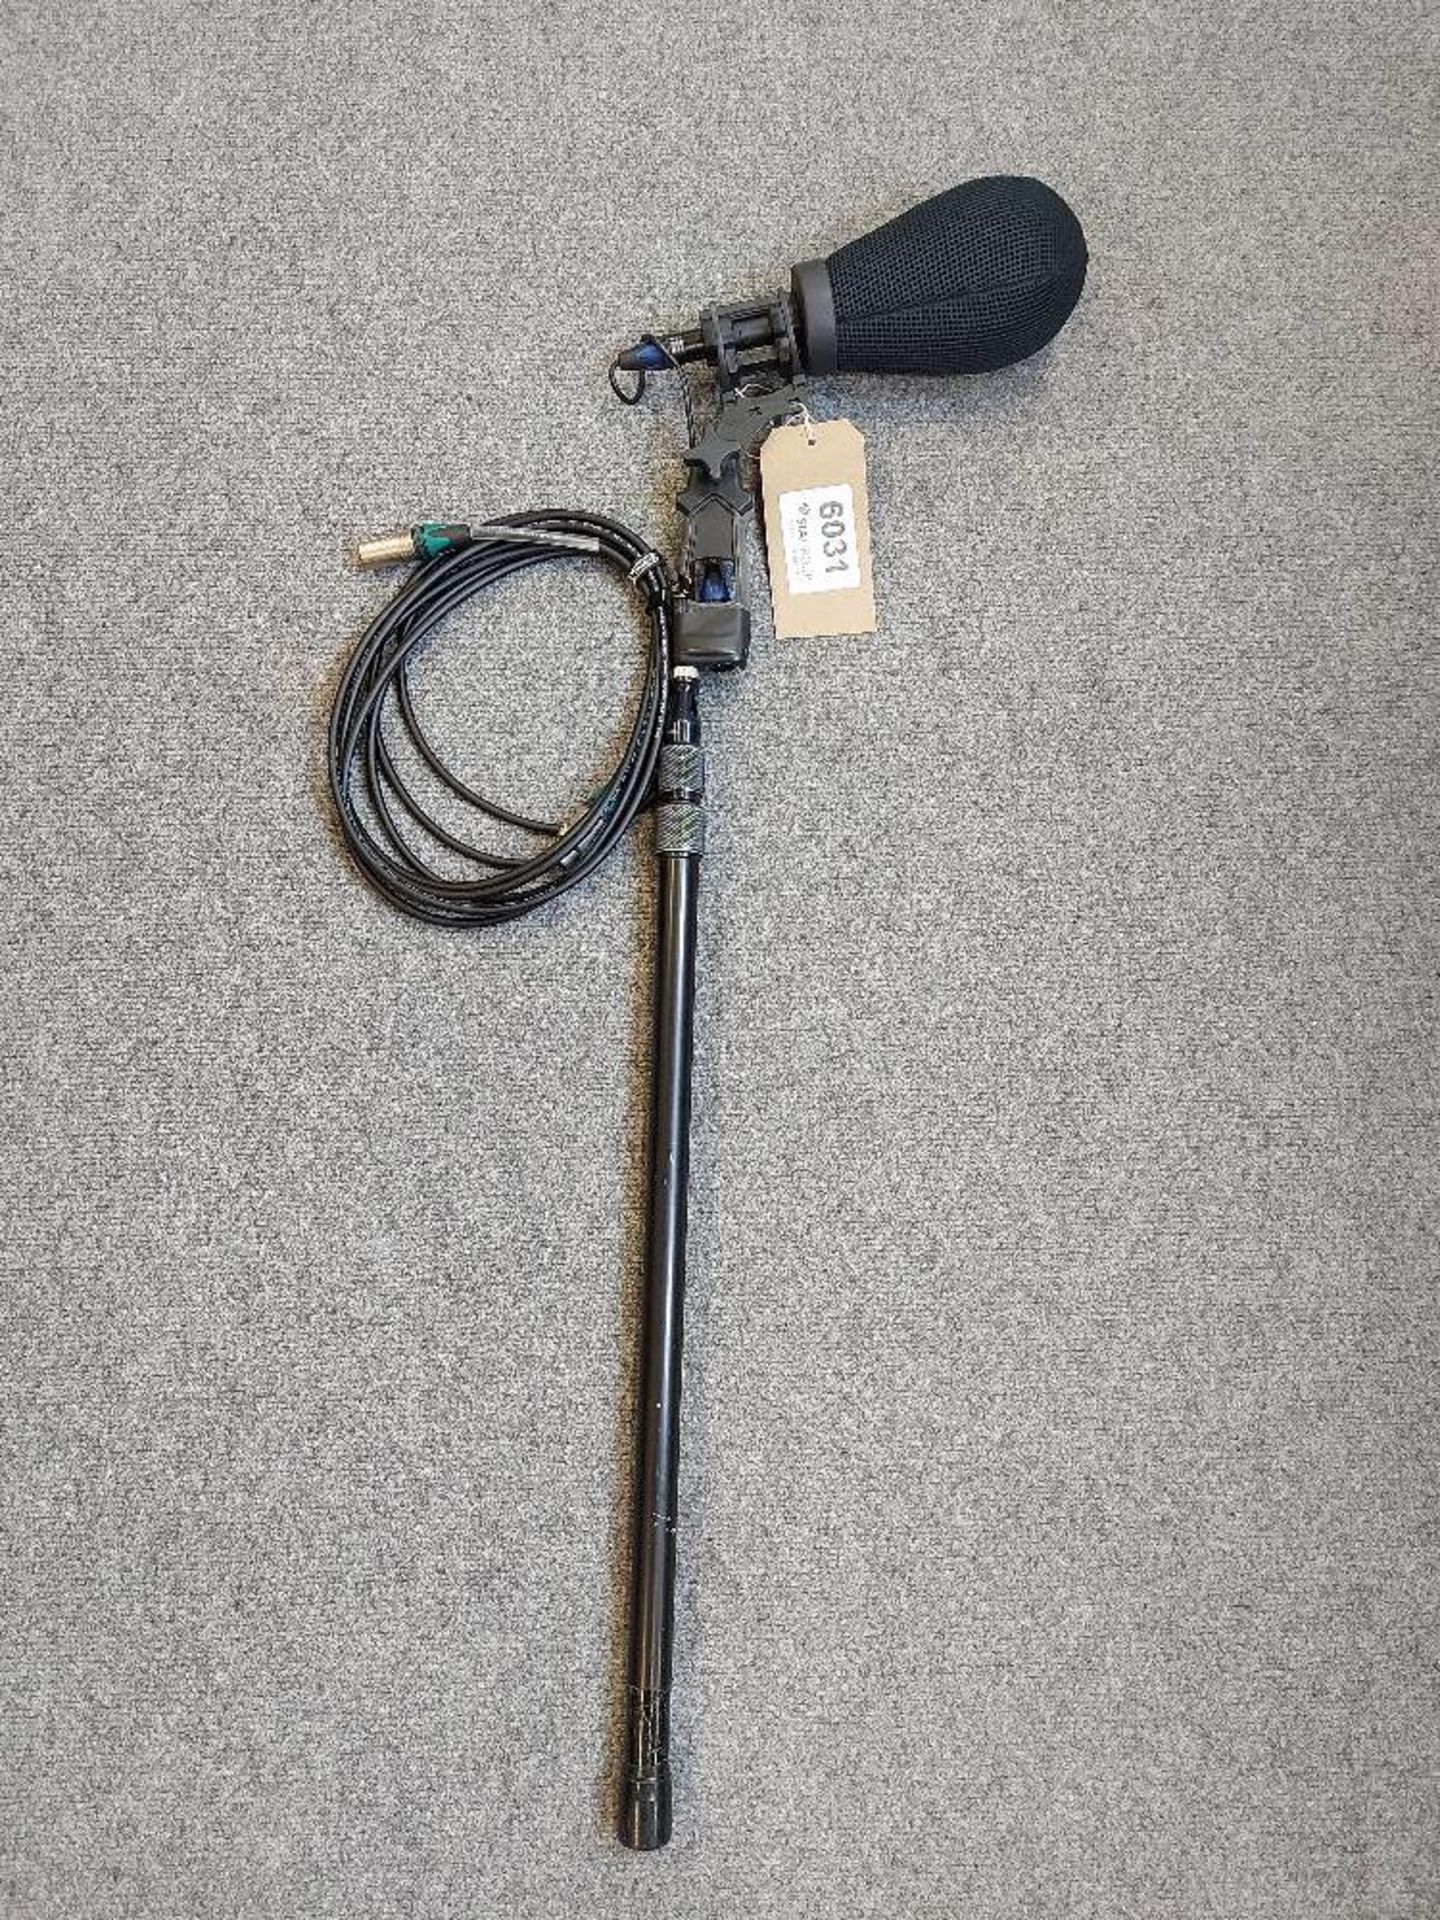 Sanken CS-1E Microphone With K-Tek Boom Pole, Rycote Softie Windshield And Neutrik Cable - Image 2 of 5